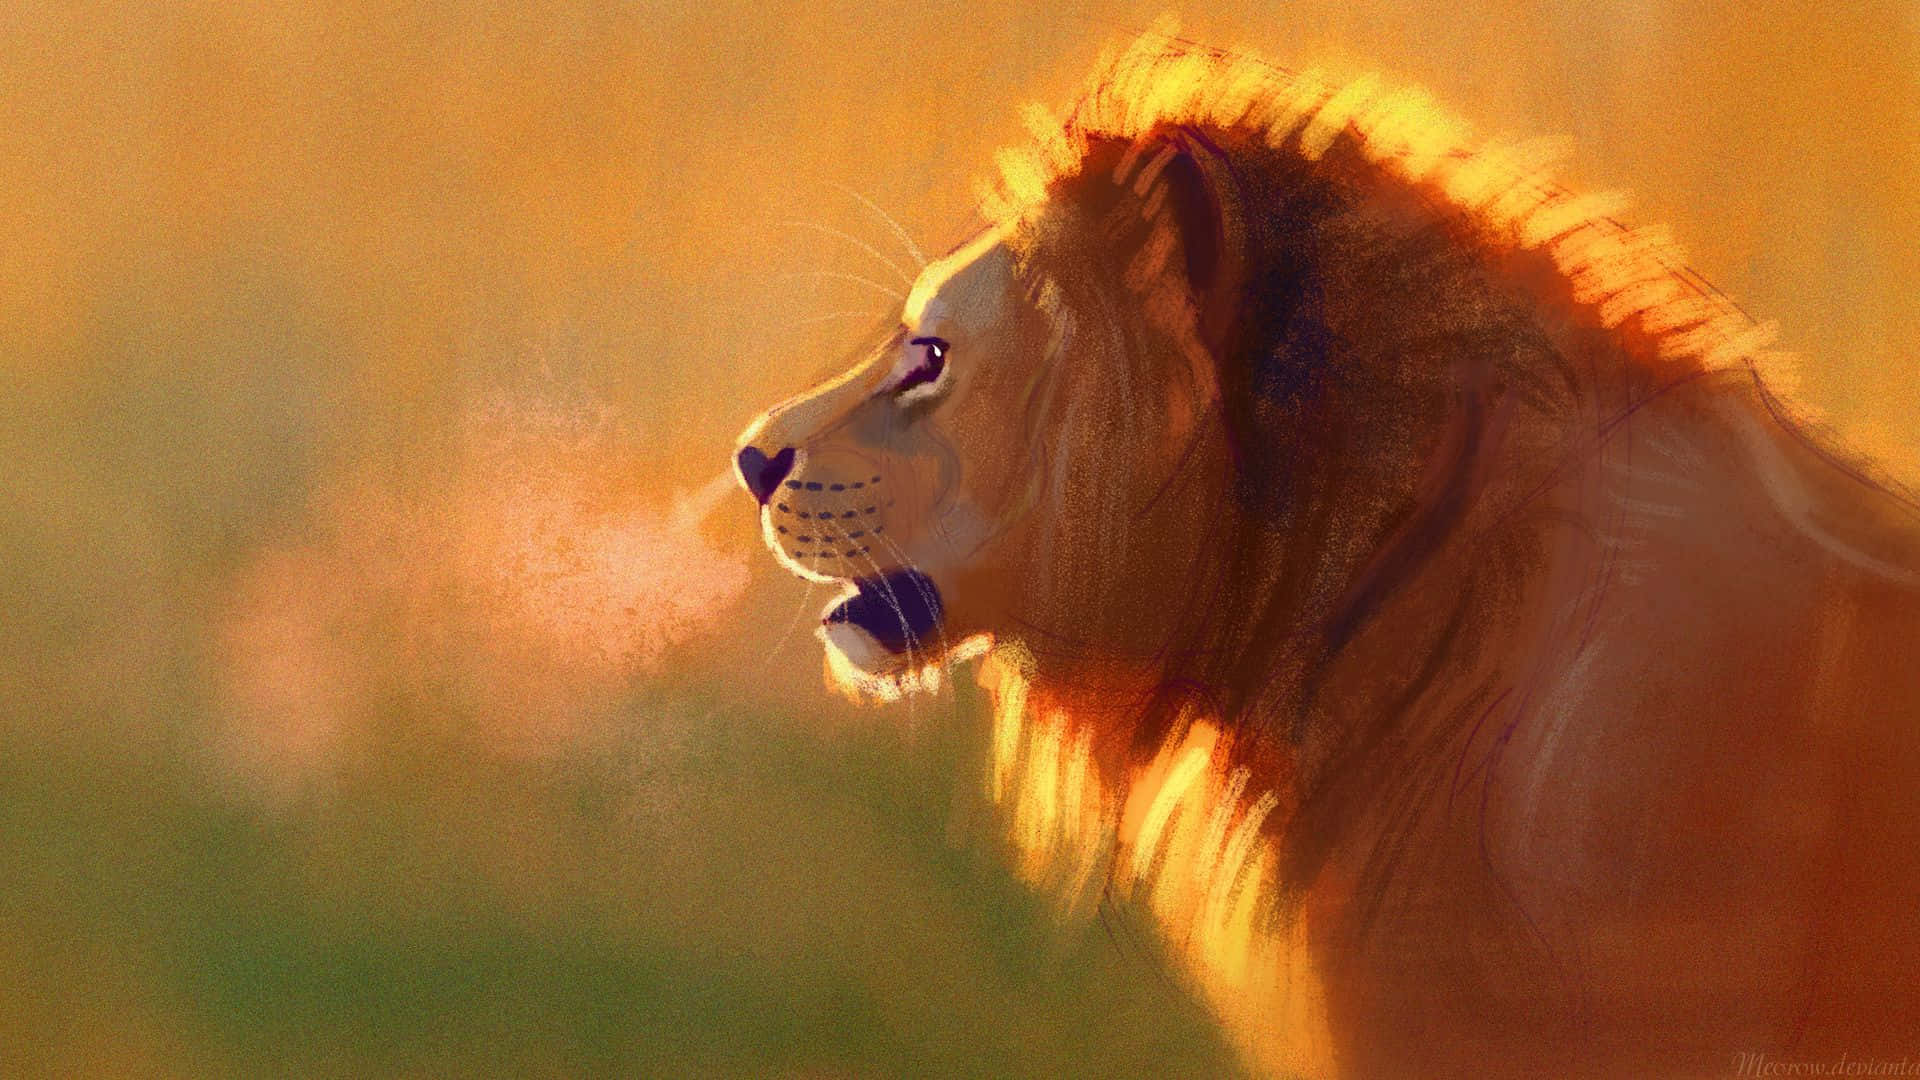 Roaring Lion With Smoke Wallpaper